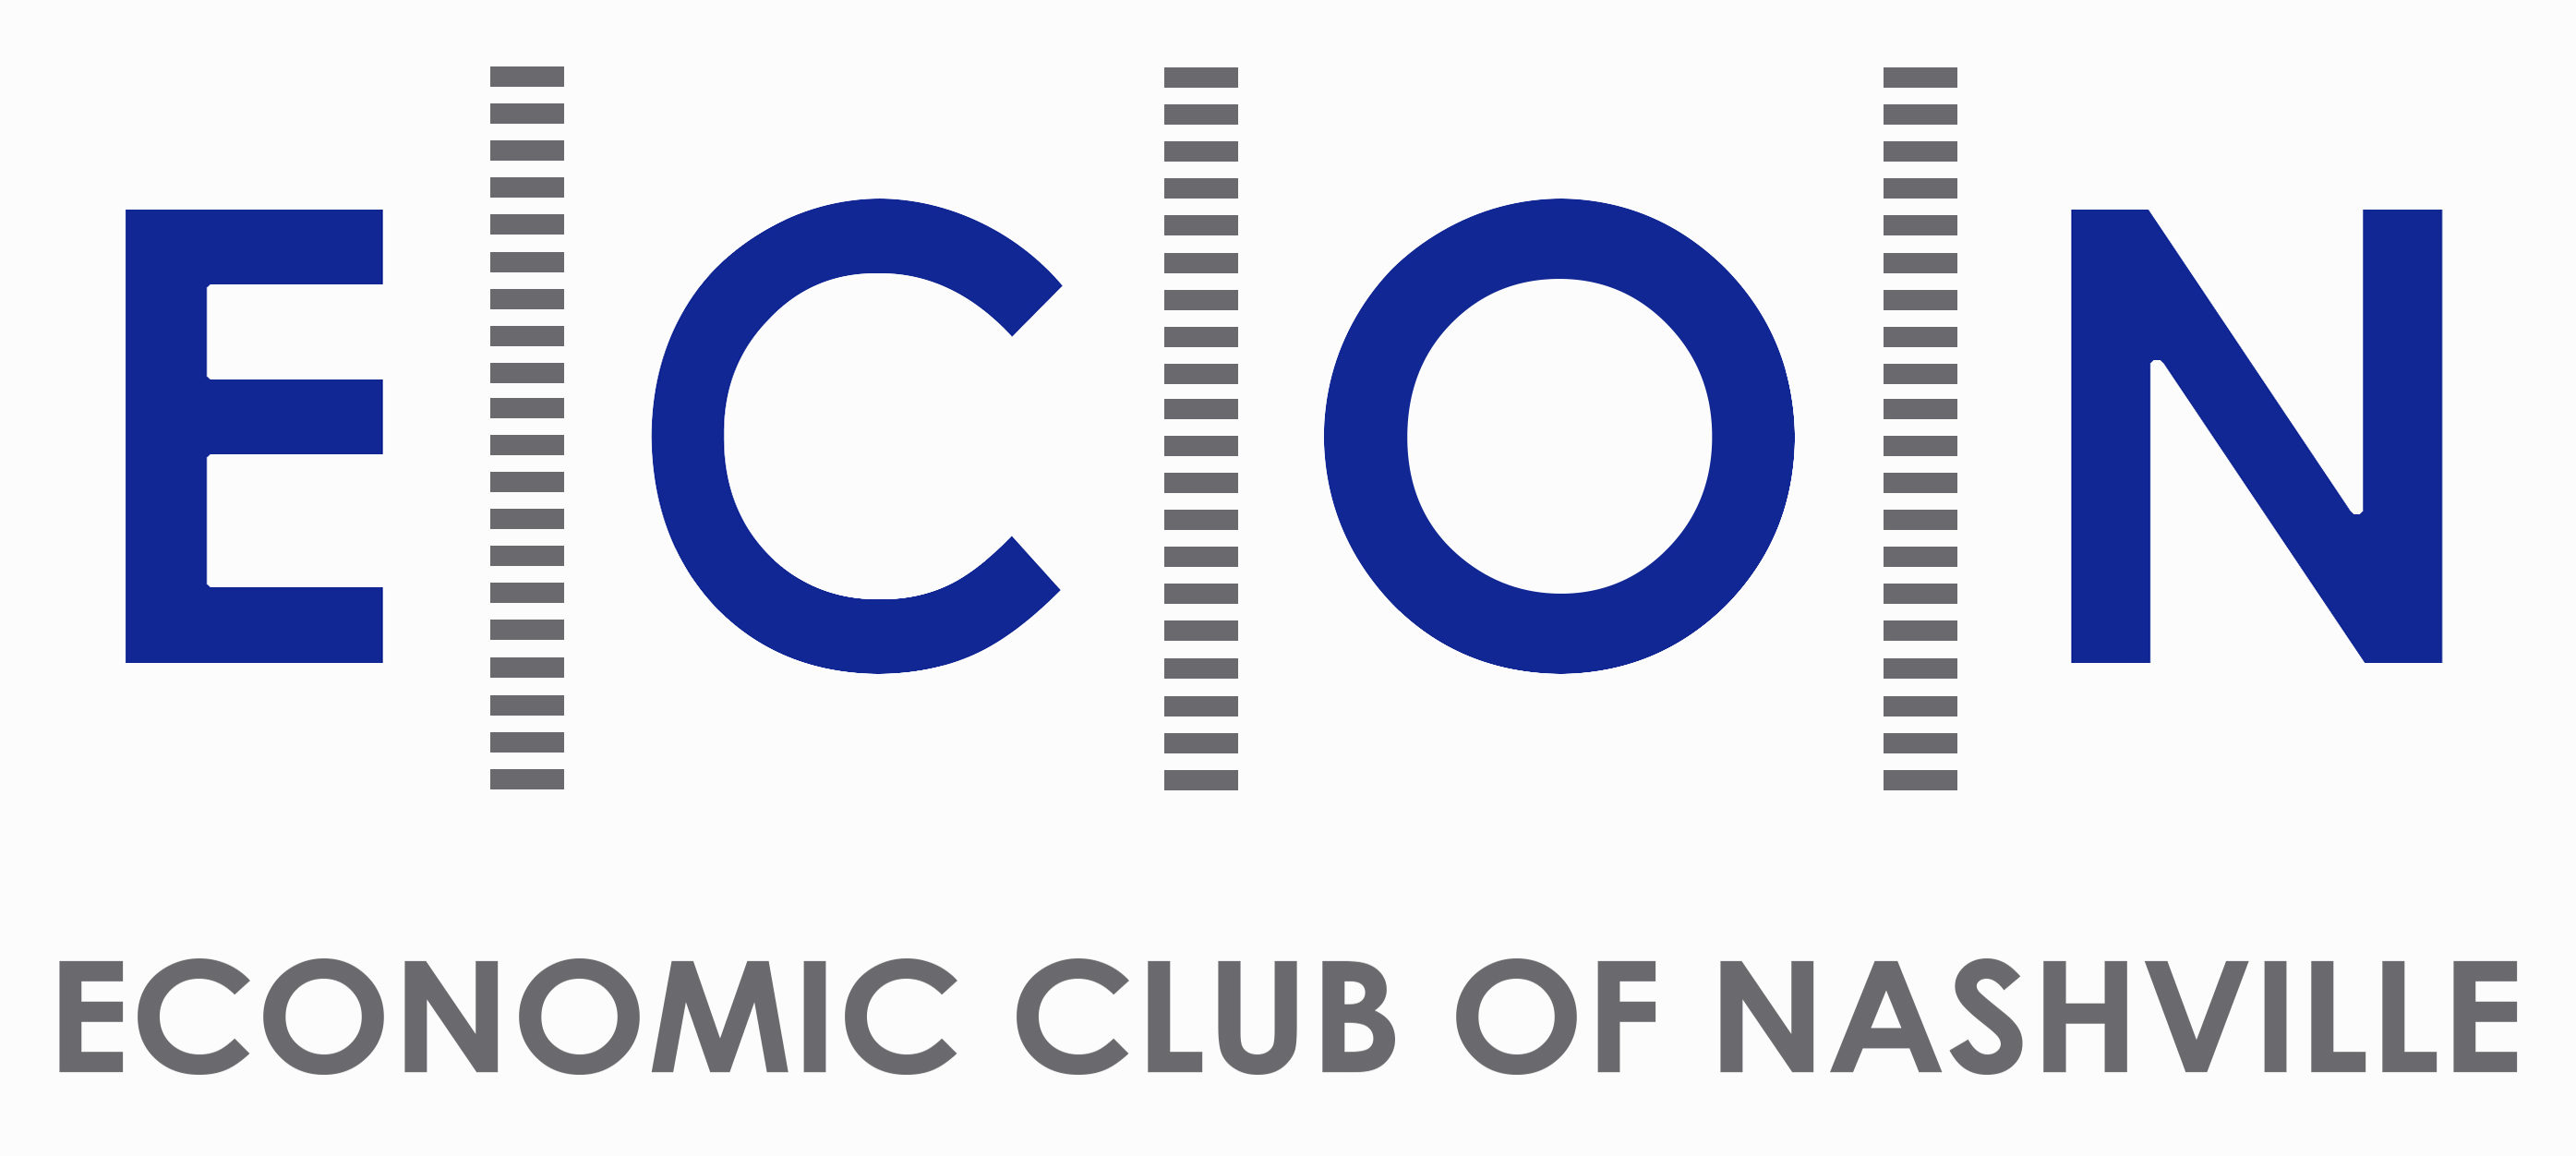 The Economic Club of Nashville